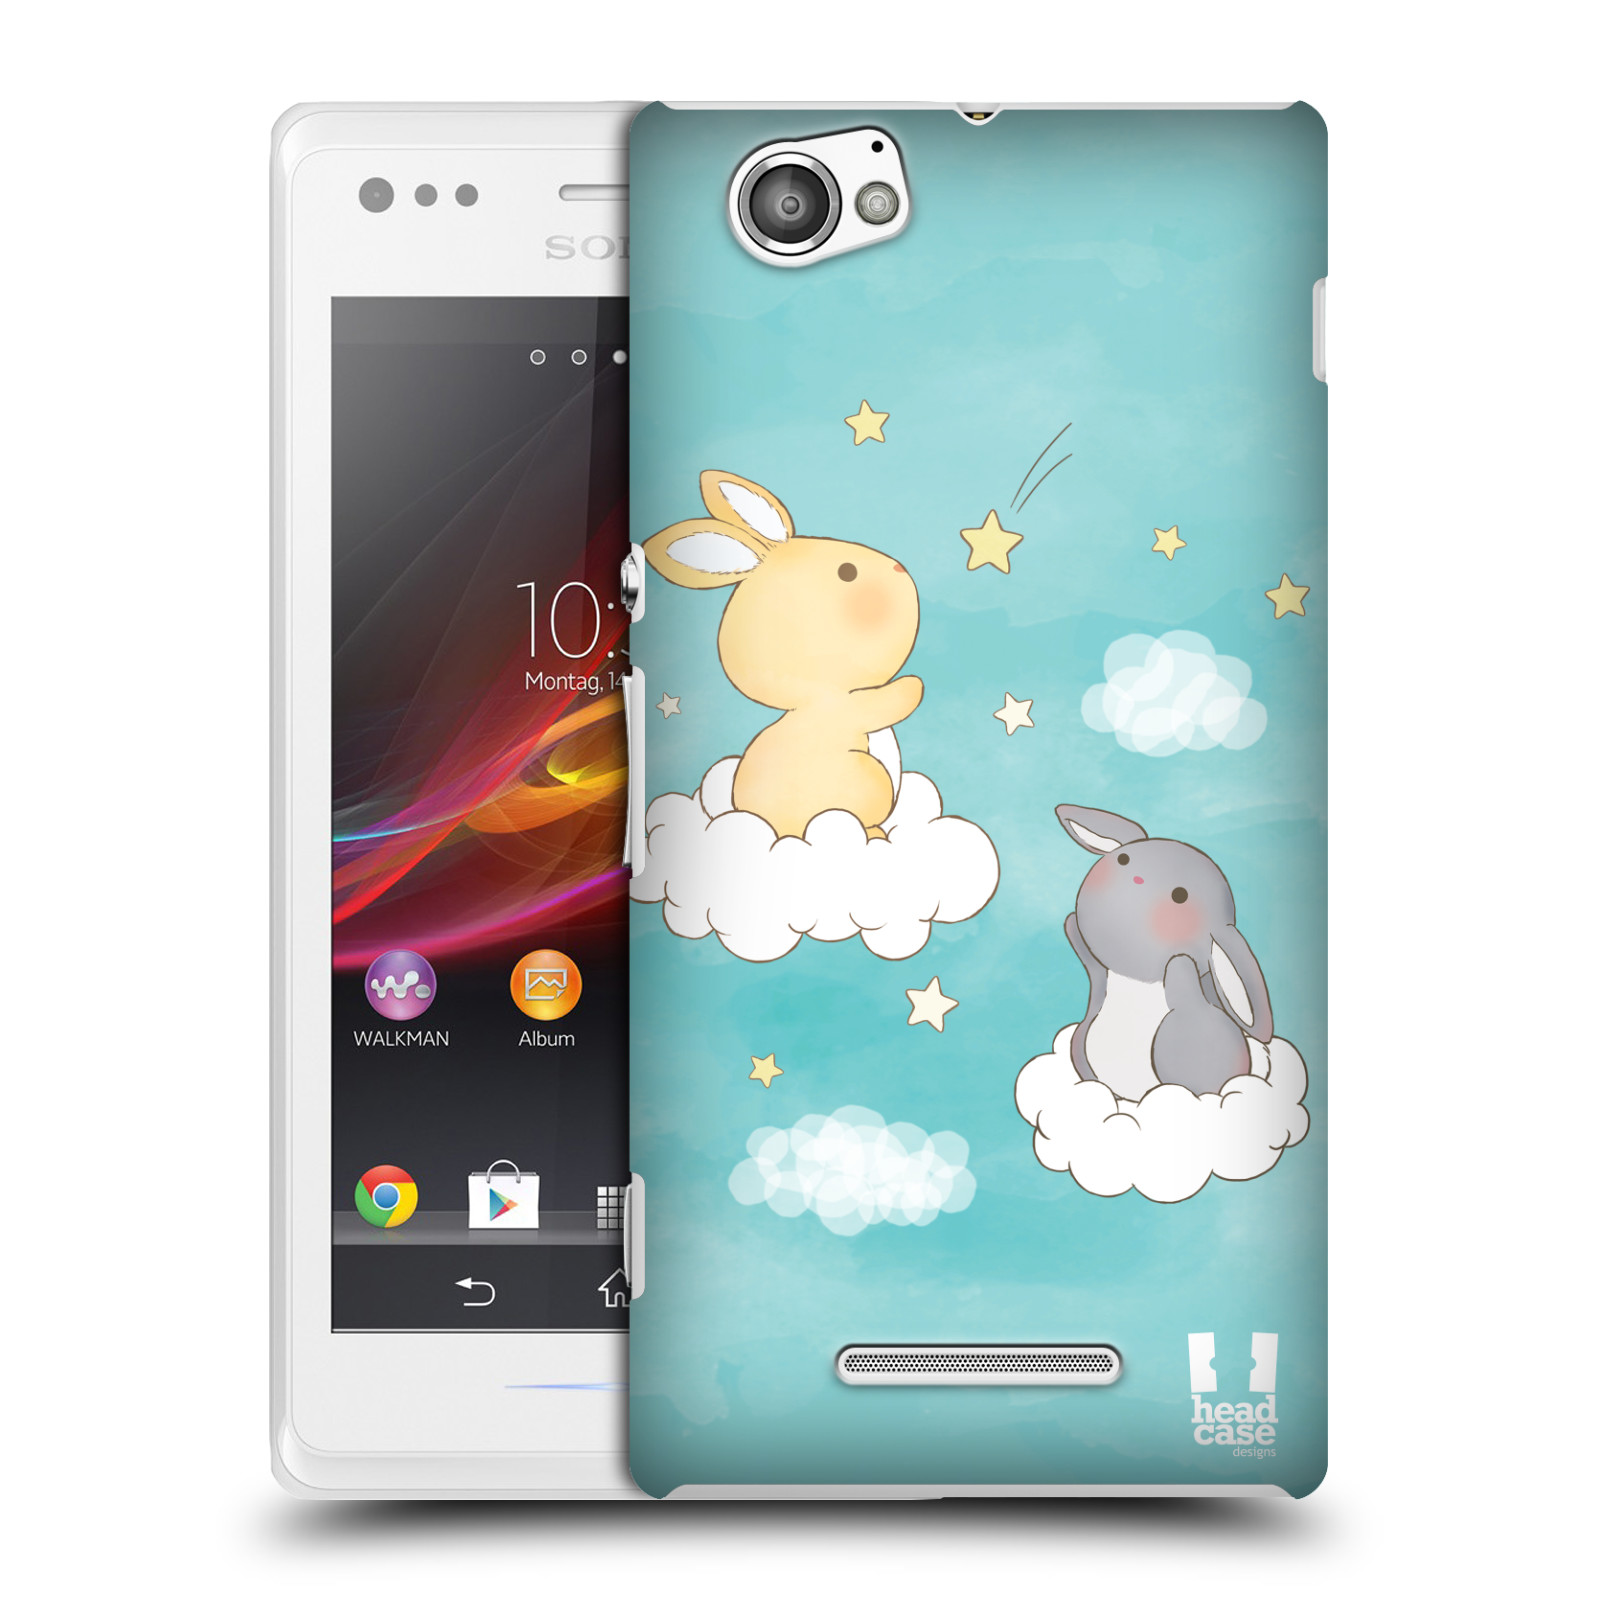 HEAD CASE plastový obal na mobil Sony Xperia M vzor králíček a hvězdy modrá